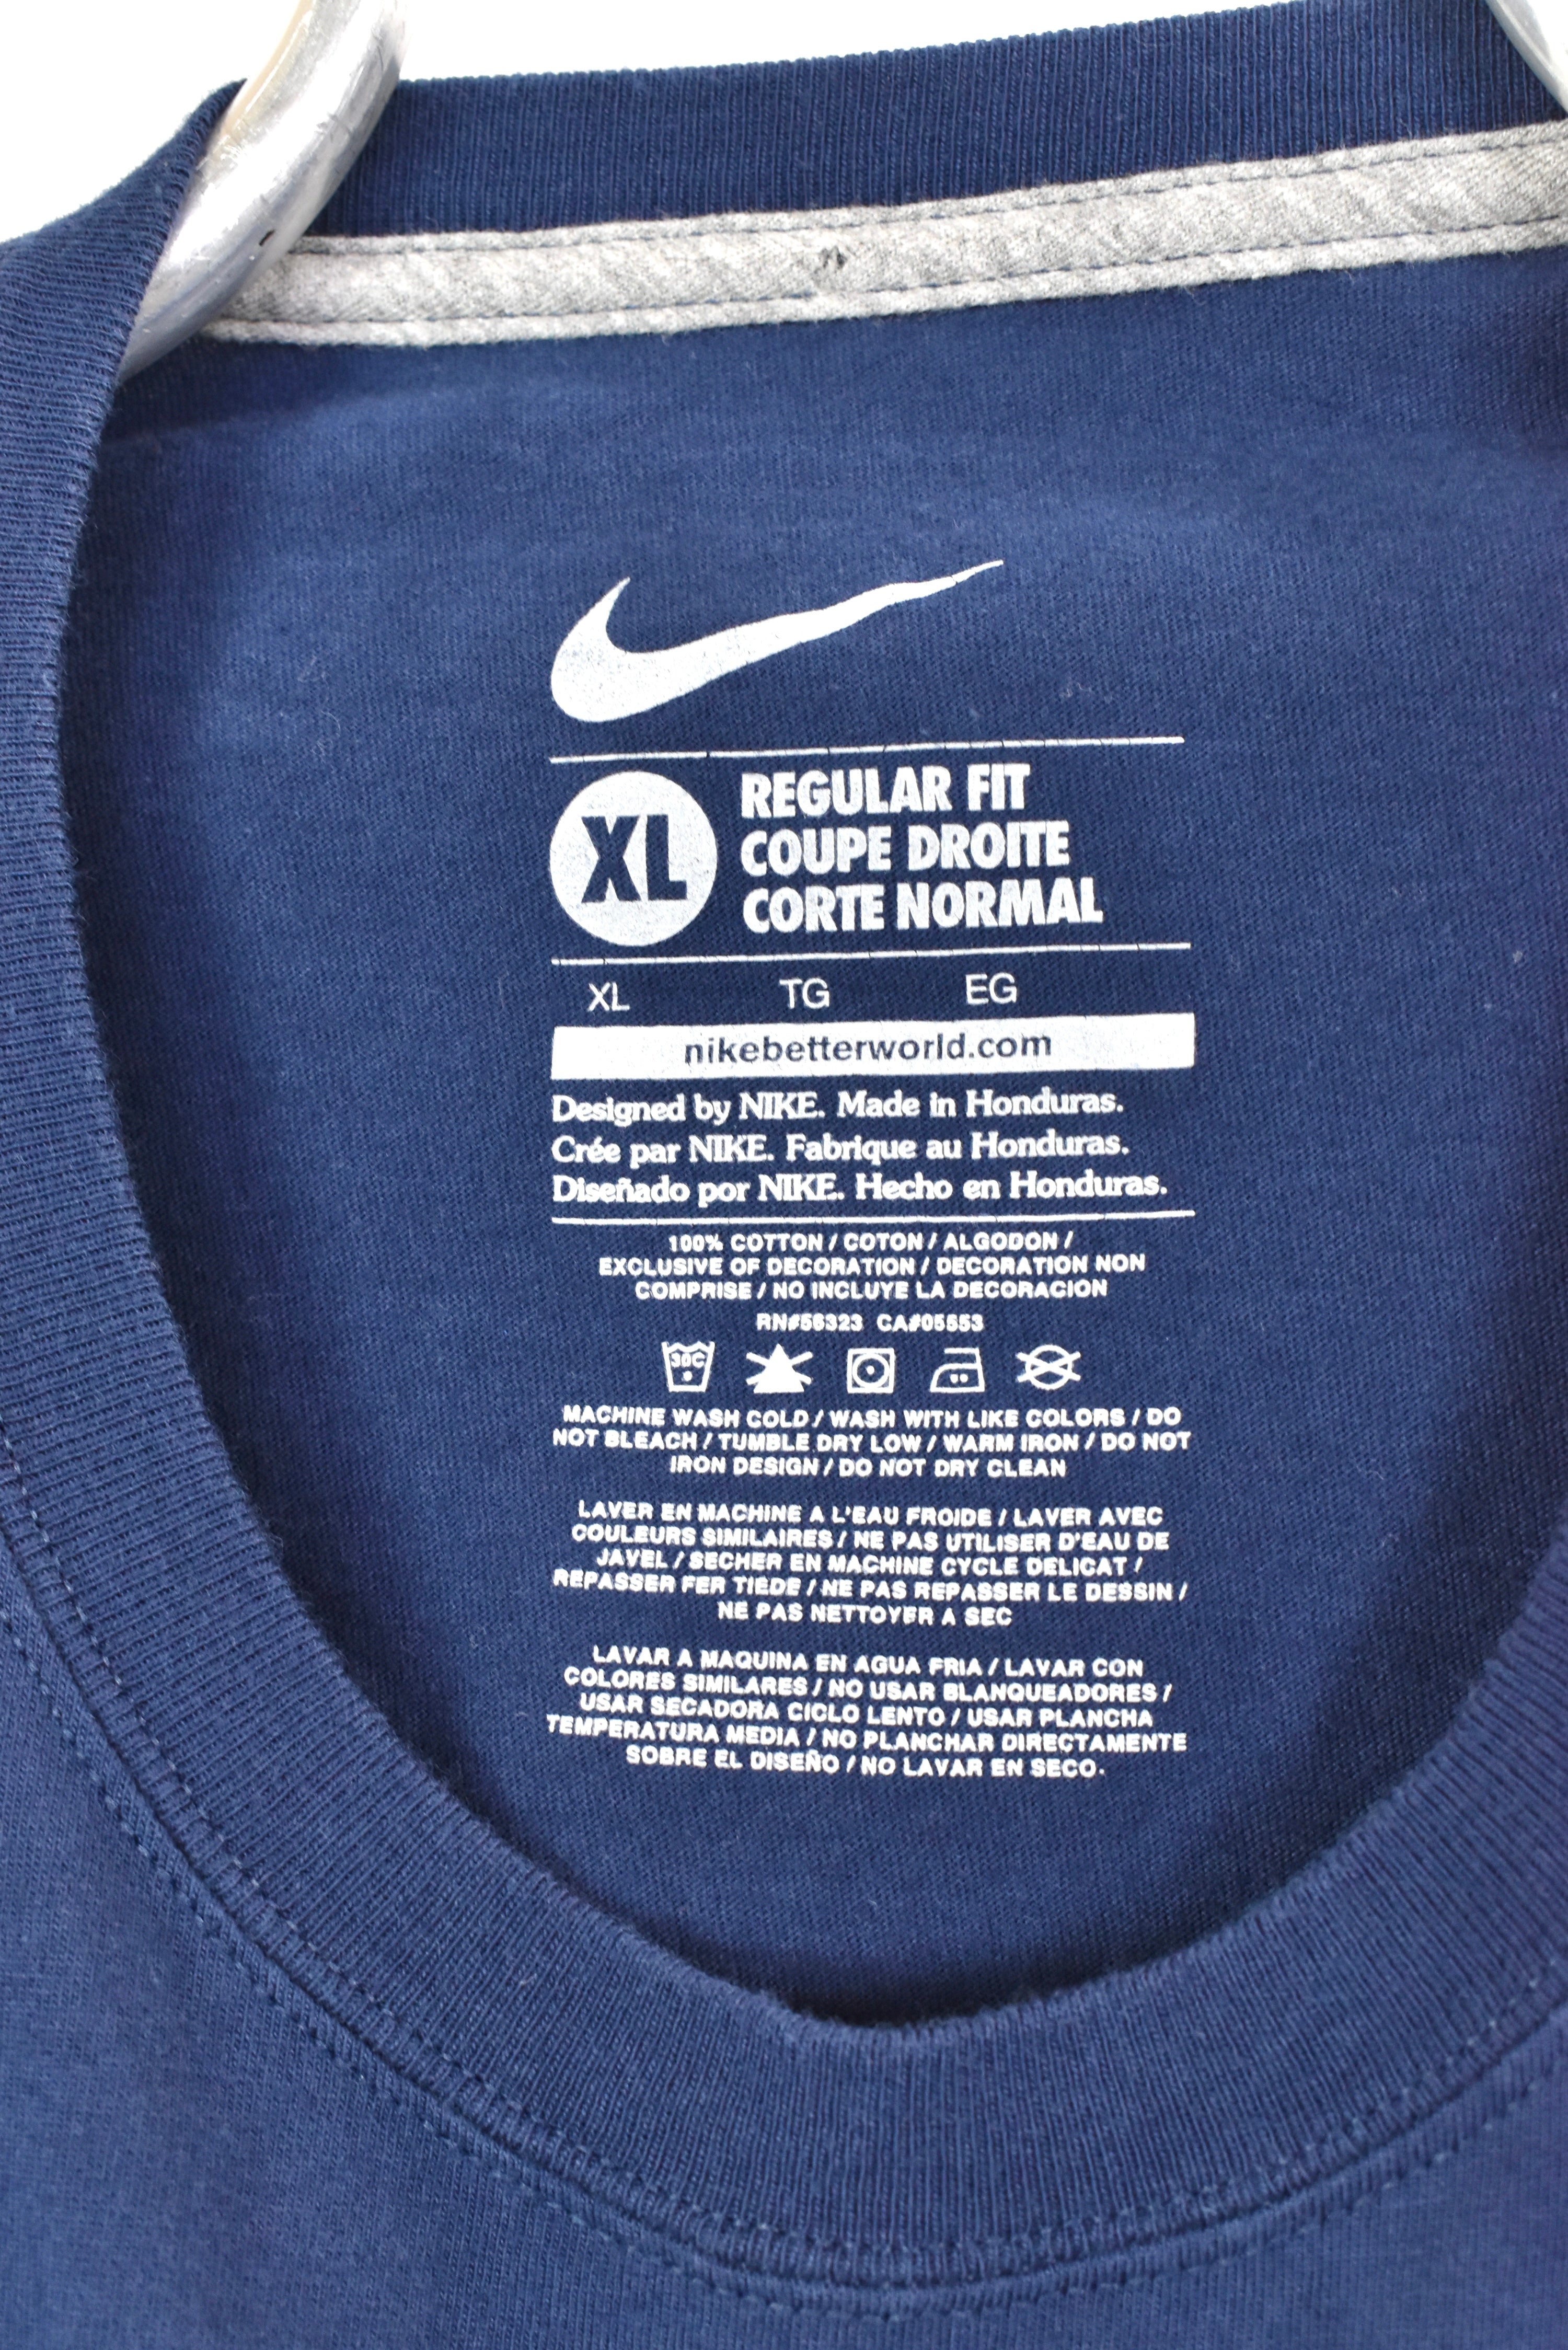 Modern Nike shirt , short sleeve navy blue graphic tee - AU L NIKE